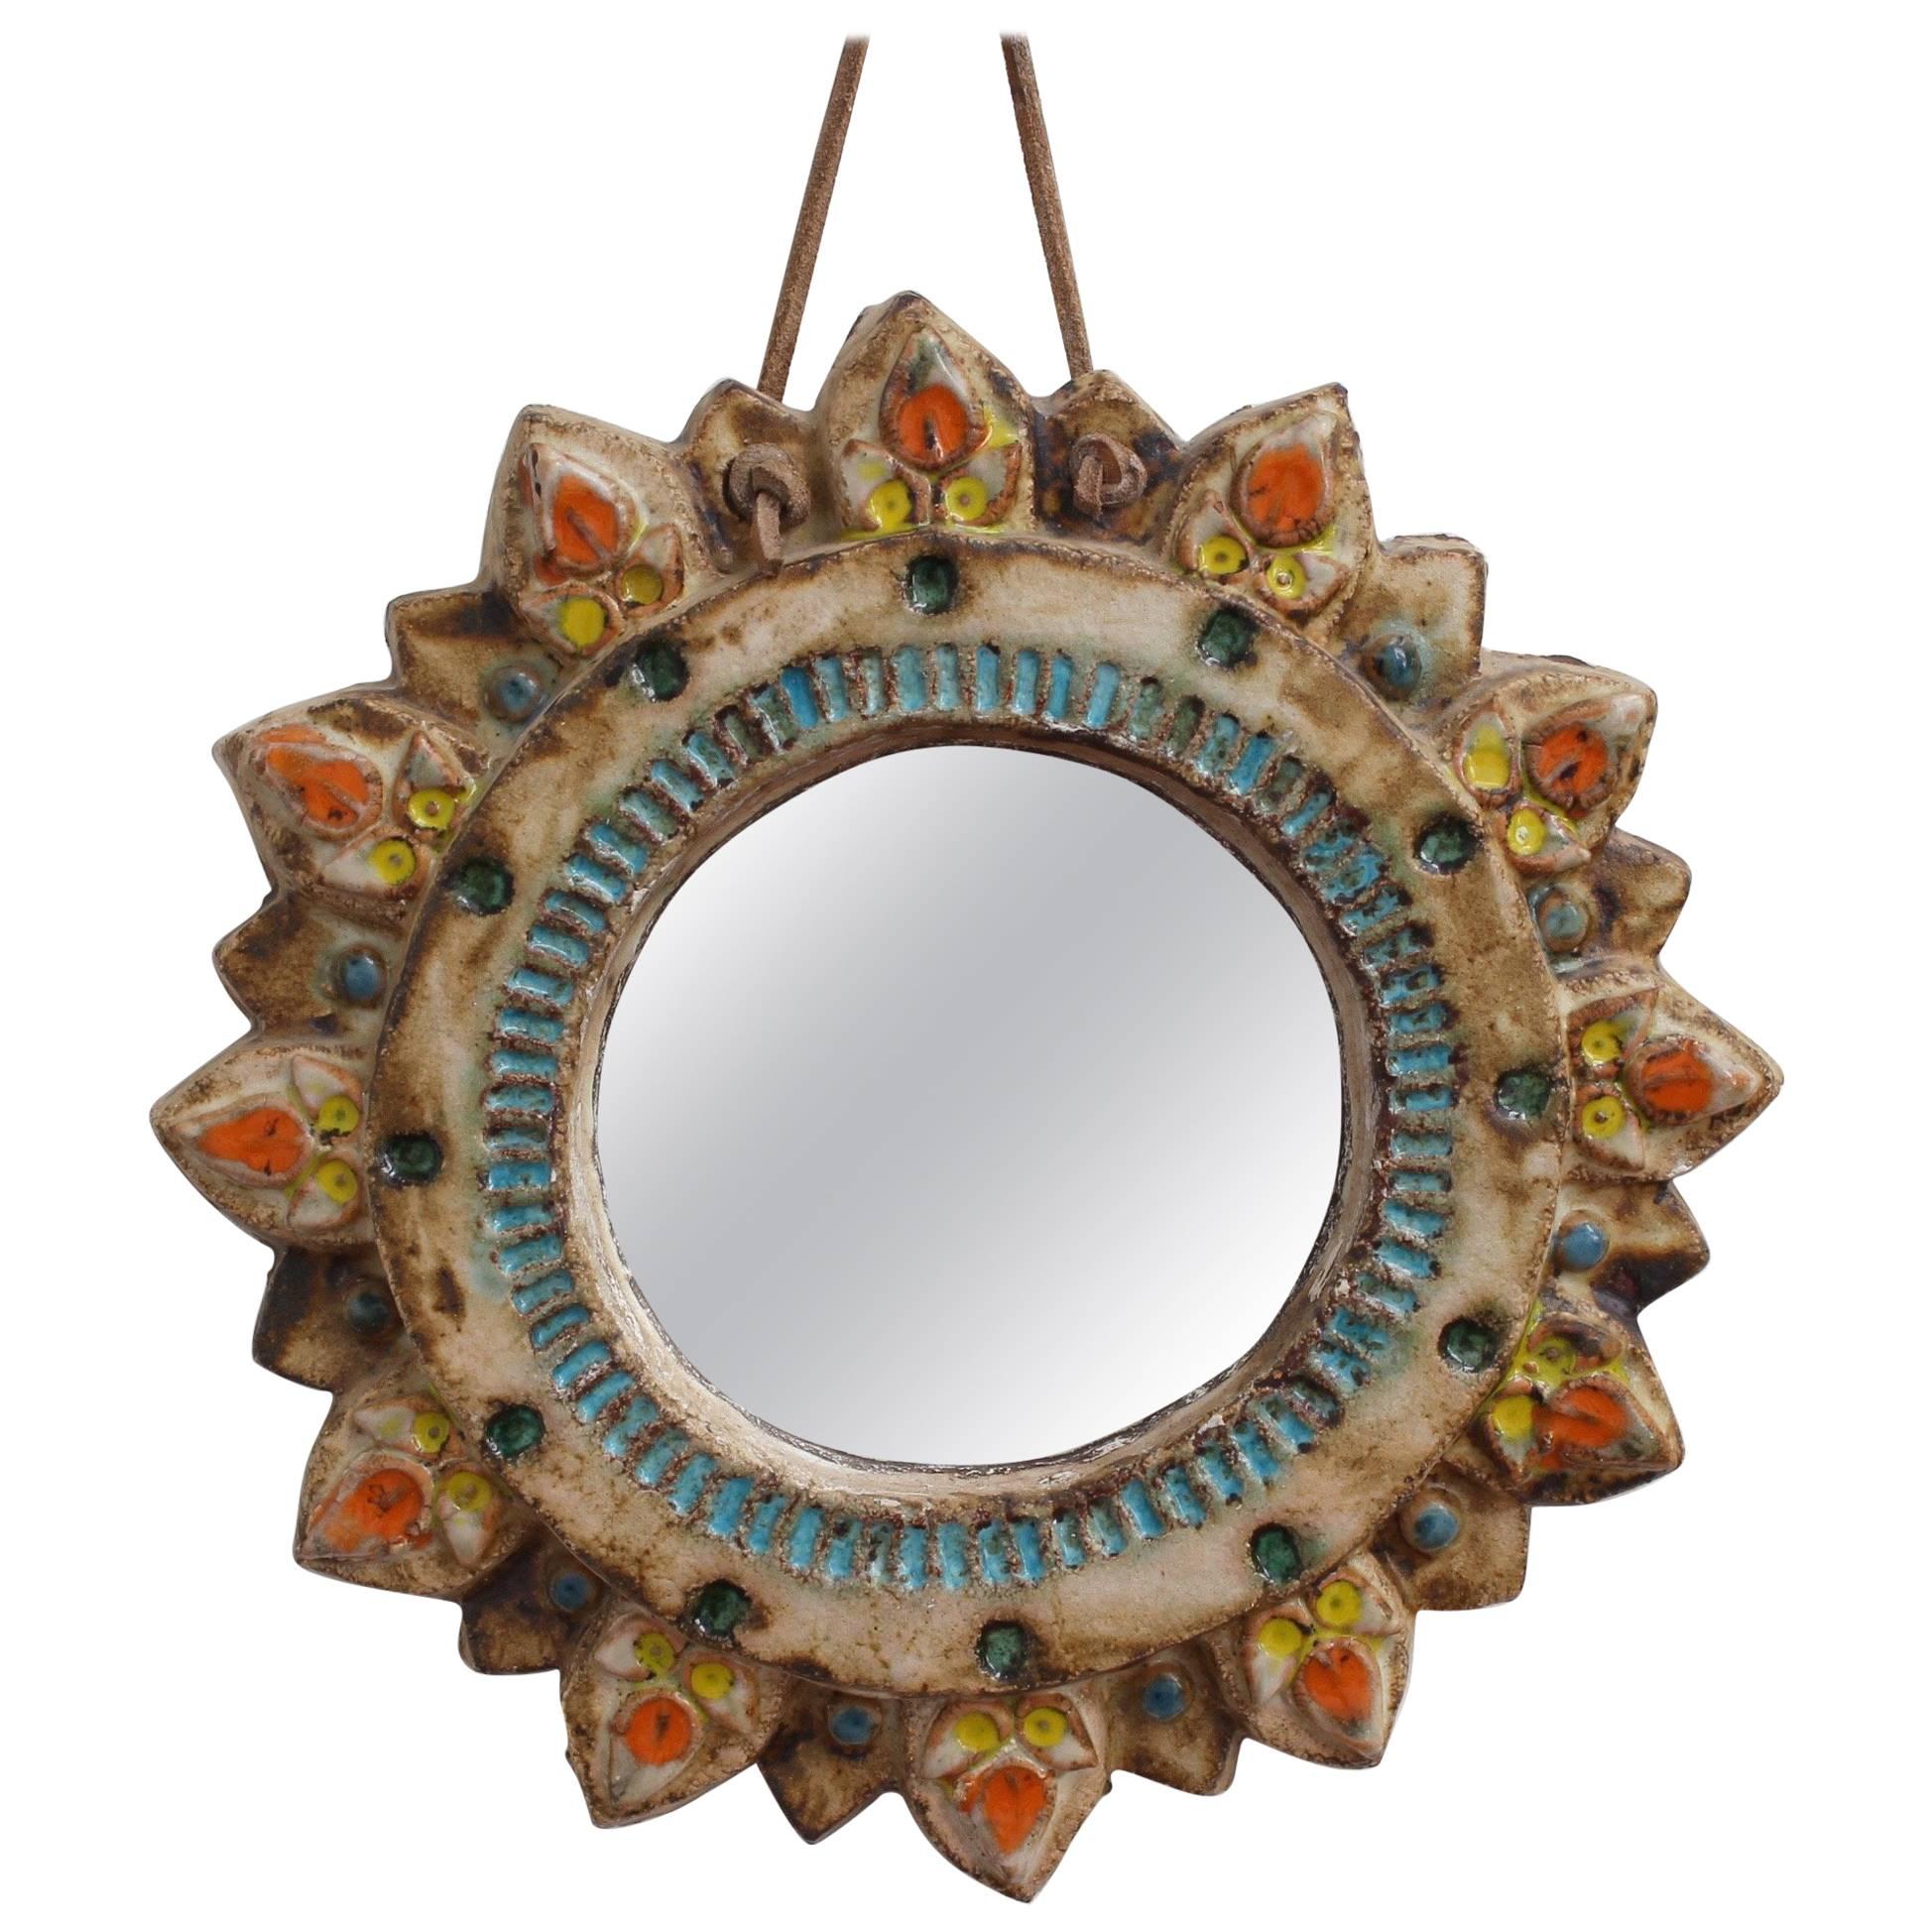 Ceramic Sunburst Mirror by La Roue, Vallauris, France circa 1950s